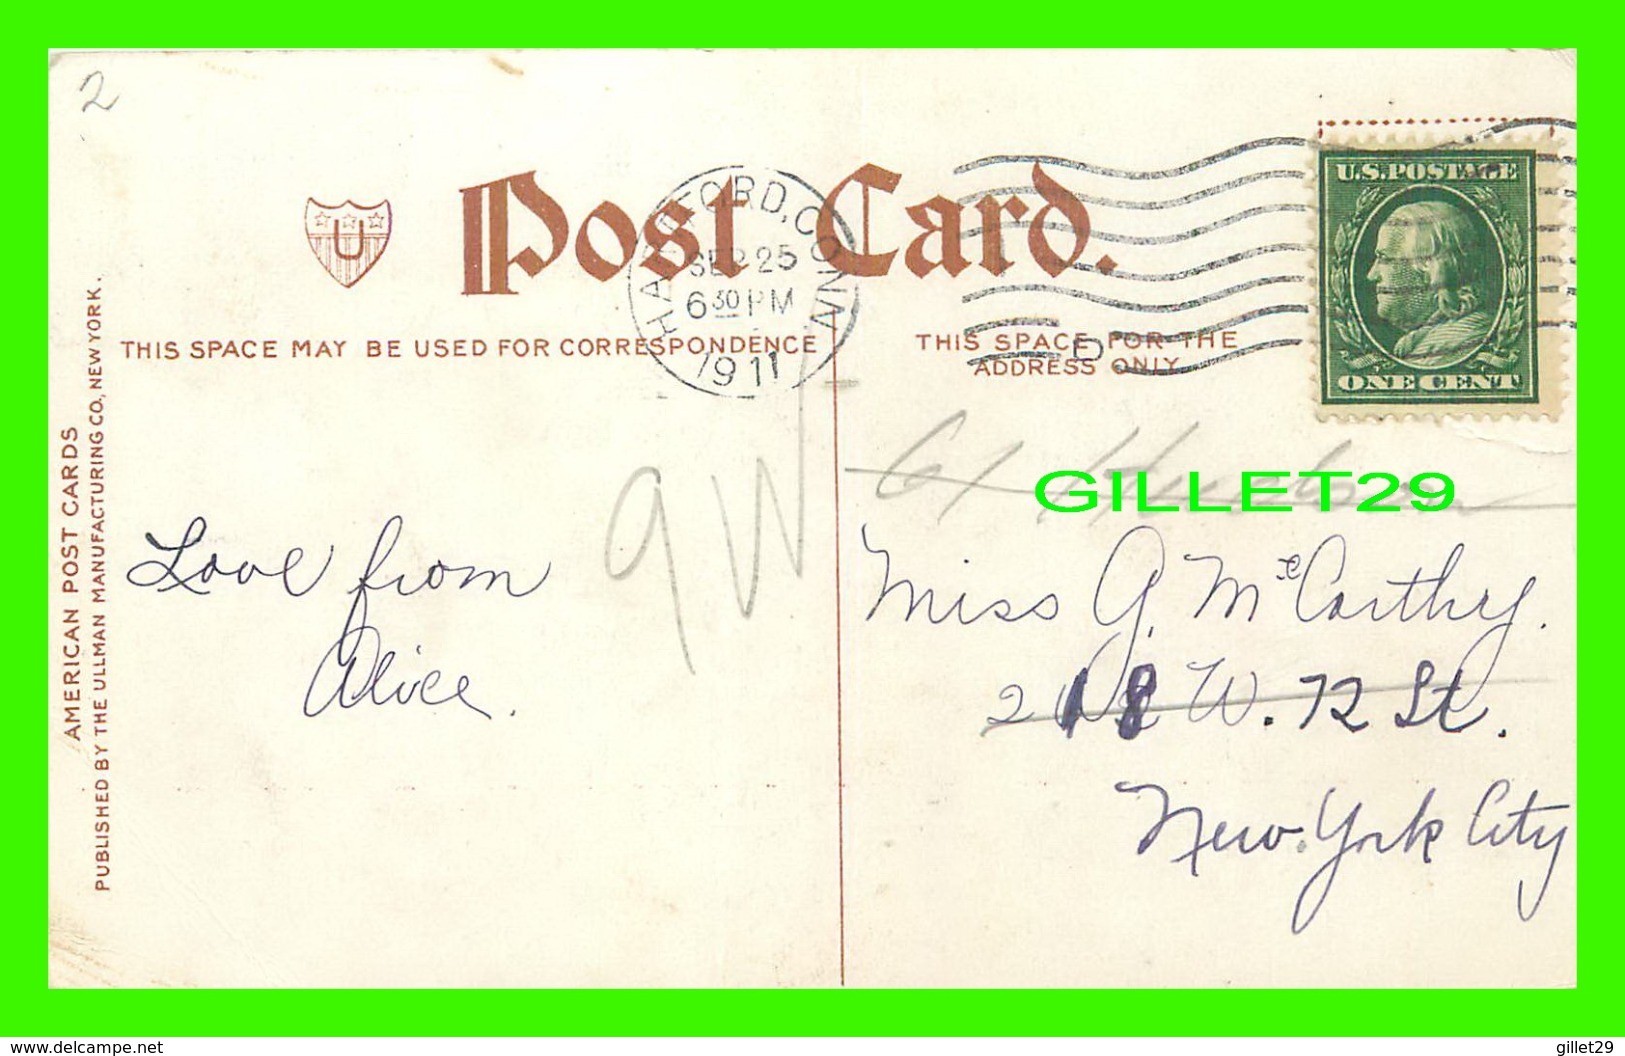 HARTFORD, CT - MEMORIAL ARCH - TRAVEL IN 1911 - AMERICAN POST CARD - PUB, ULLMAN - - Hartford